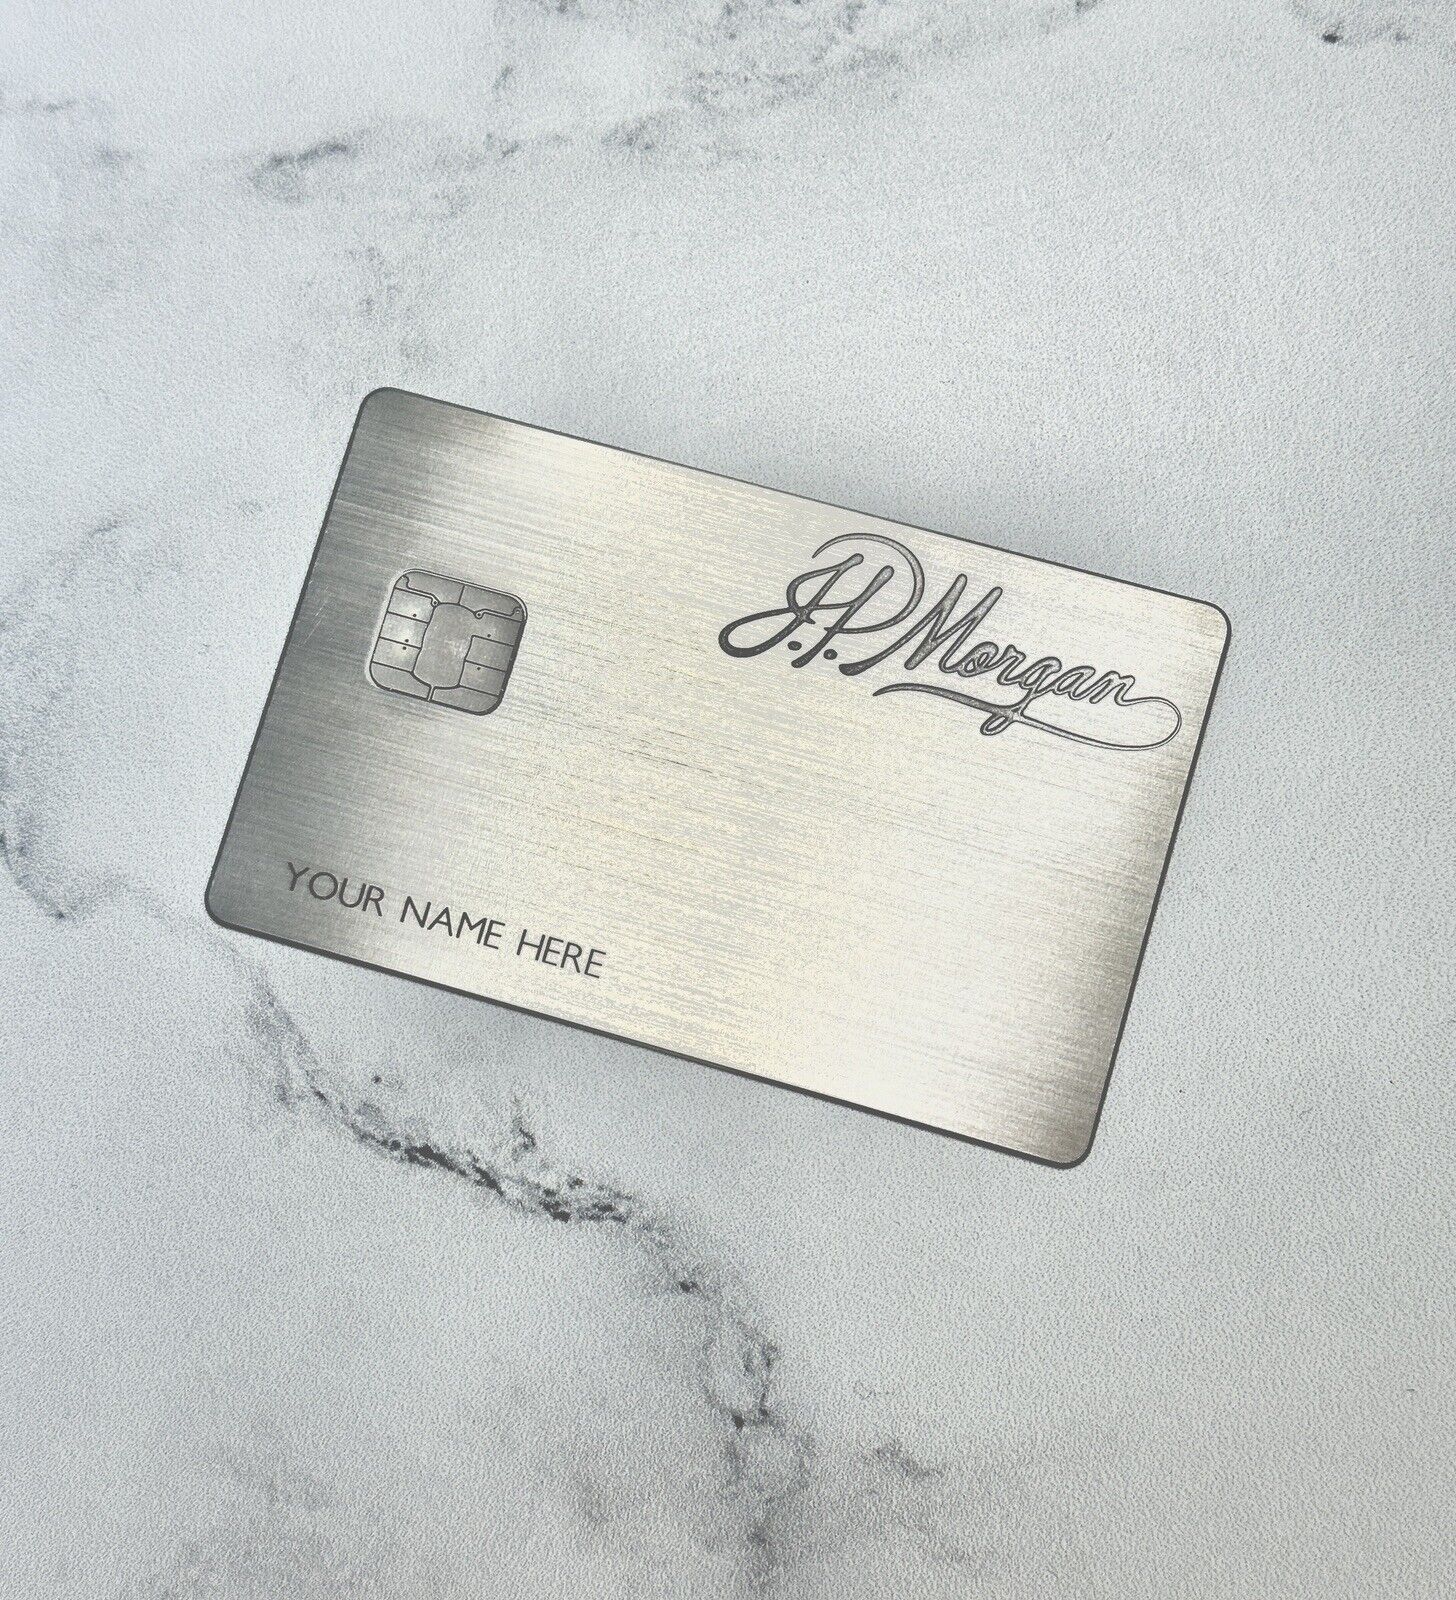 JP Morgan Reserve CUSTOM Palladium Silver Metal Novelty Card - FAST USA SHIPPING